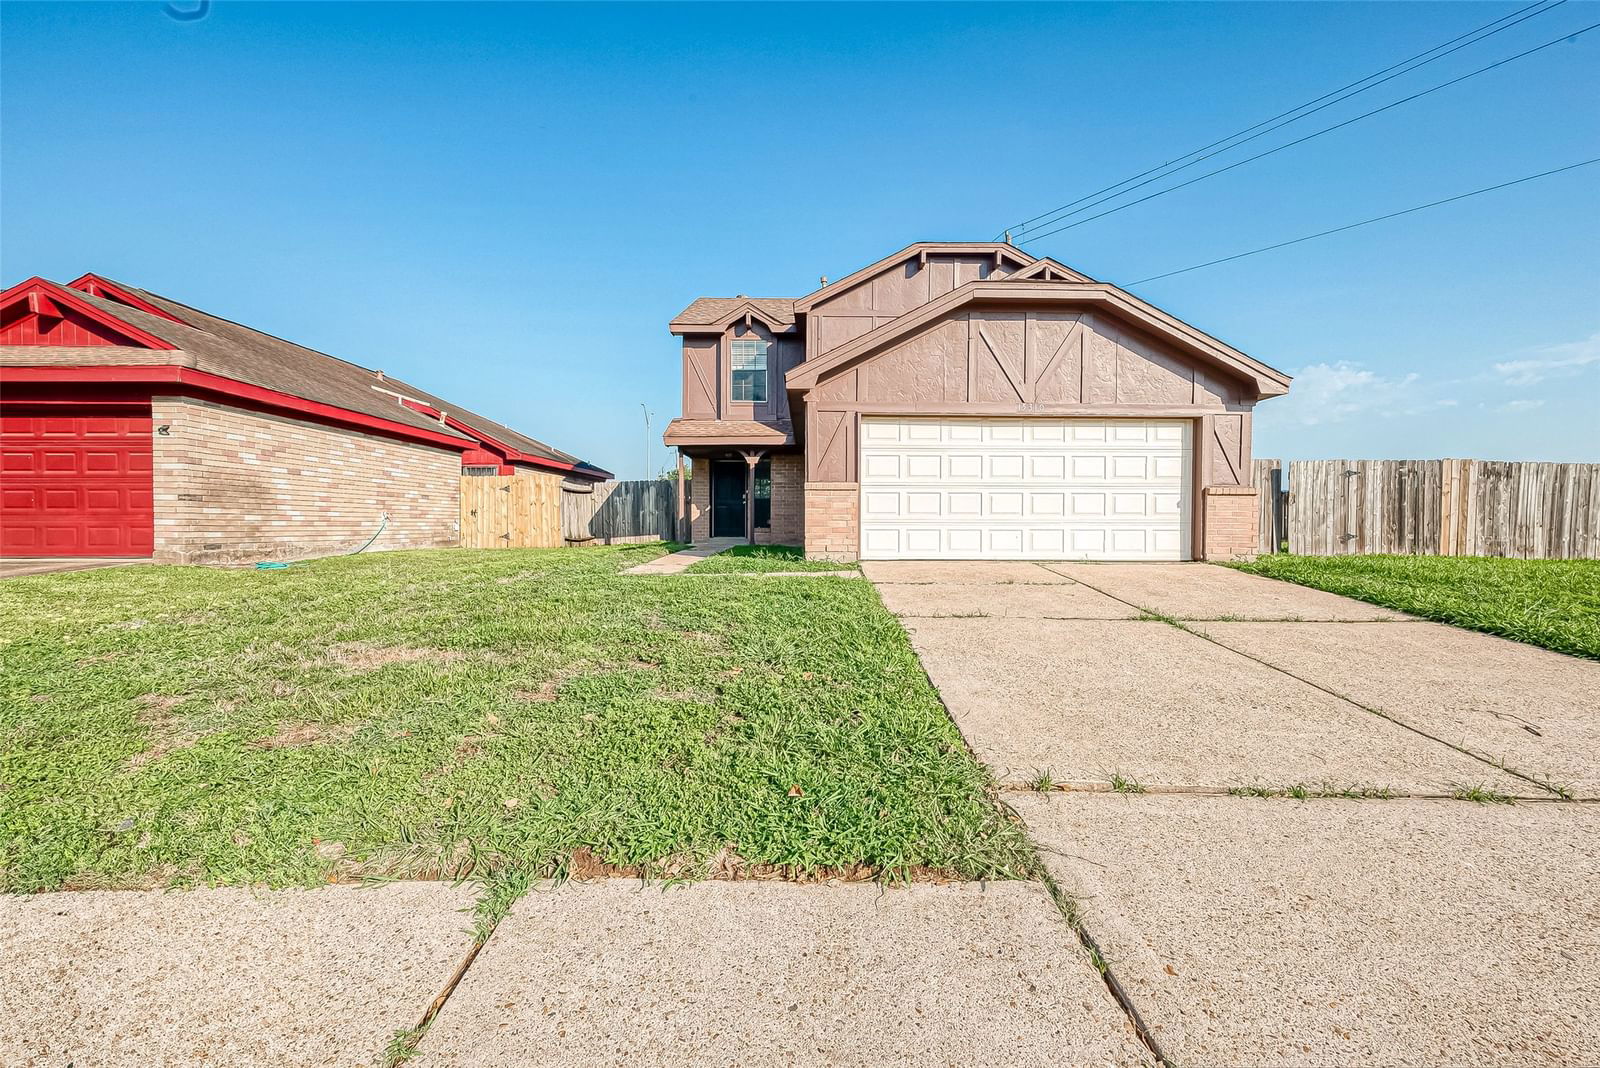 Real estate property located at 15310 Appleridge, Fort Bend, Briargate Sec 13 R/P, Houston, TX, US